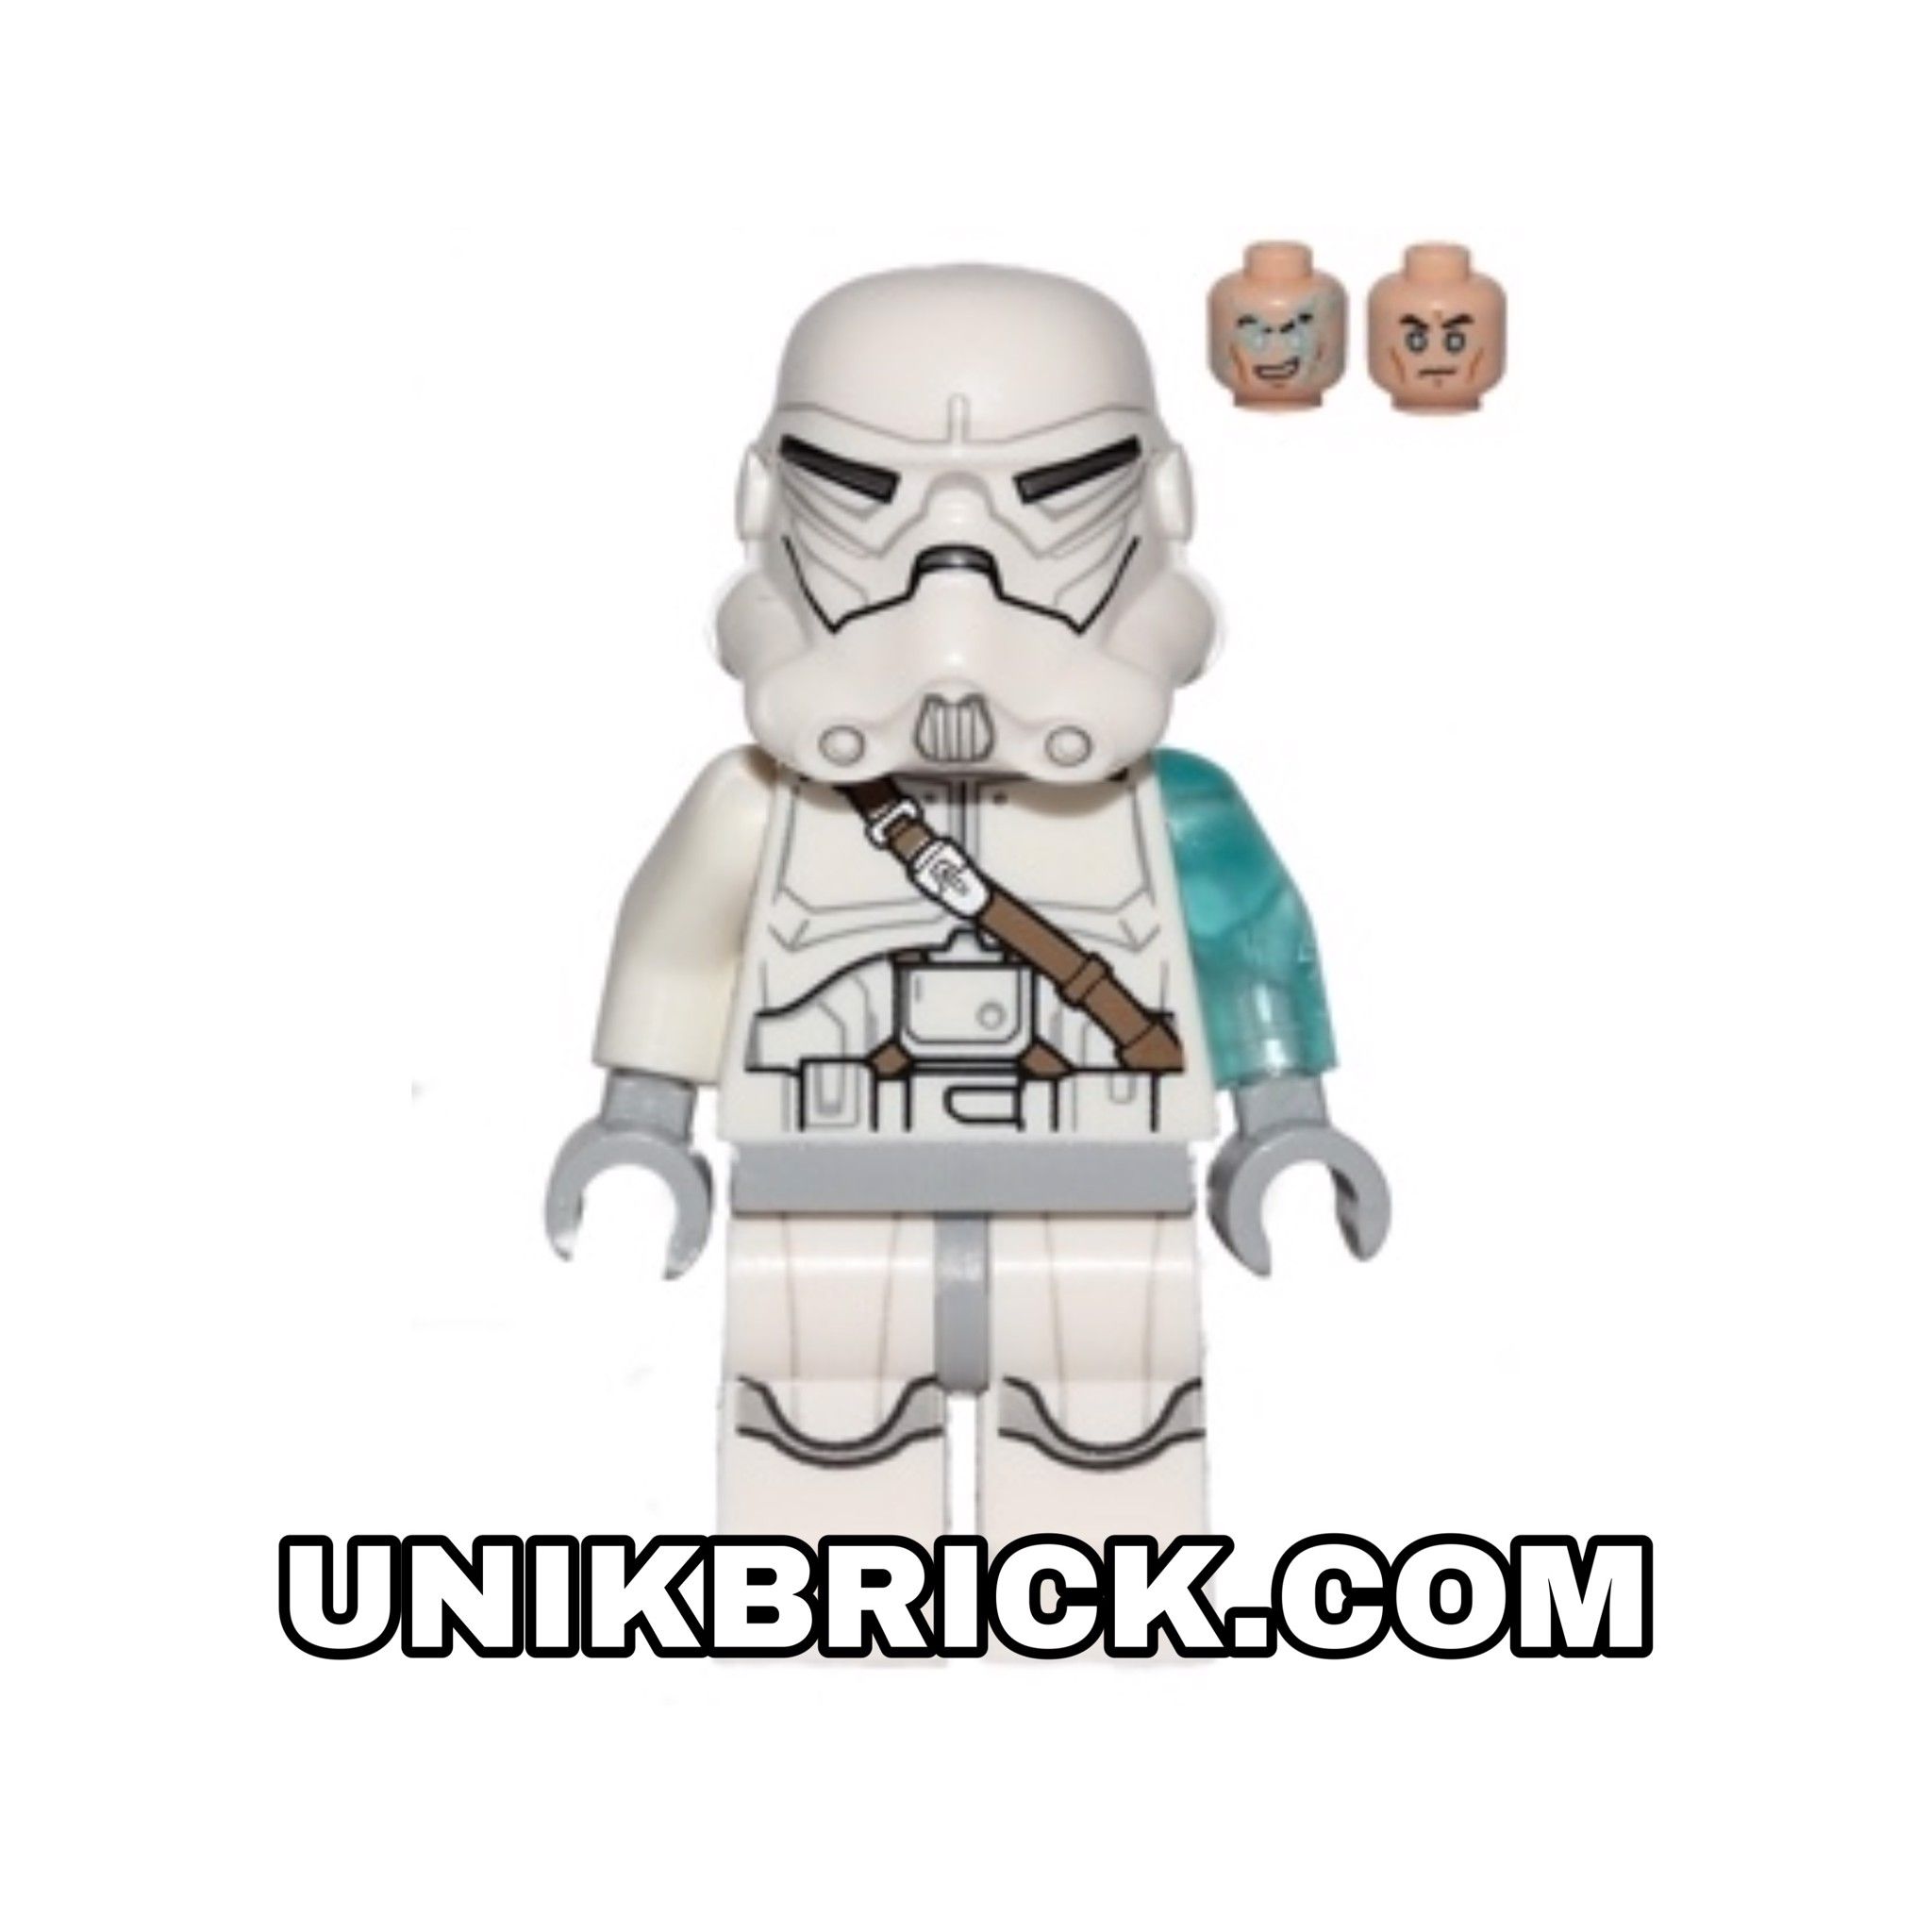 [ORDER ITEMS] LEGO Jek-14 with Stormtrooper Helmet